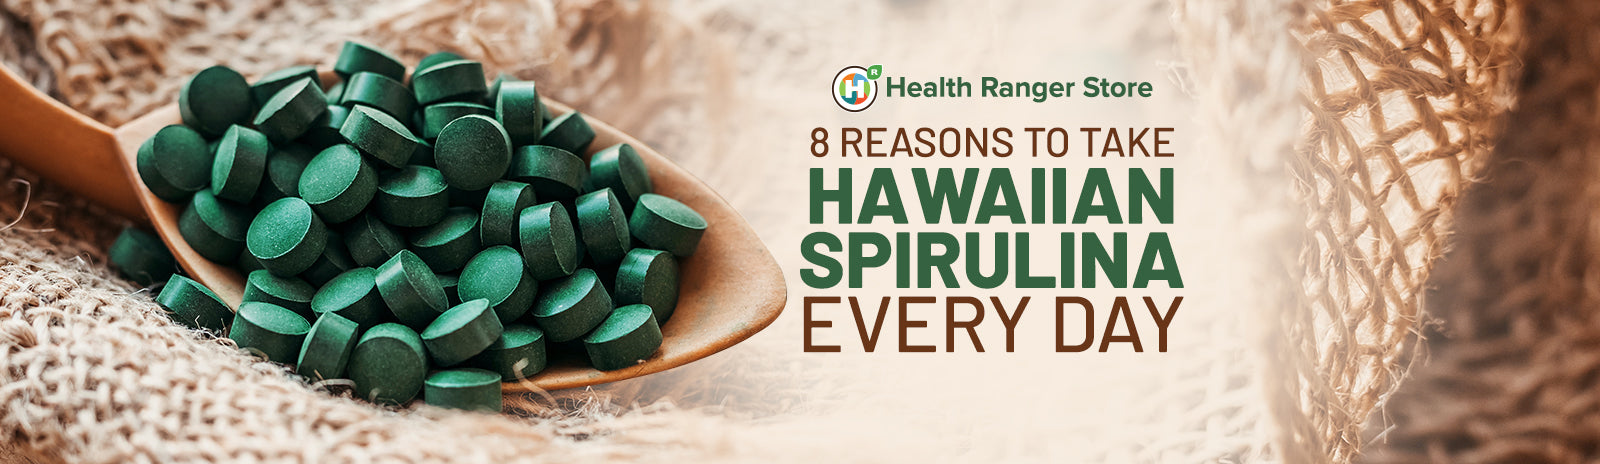 8 Reasons to take Hawaiian Spirulina every day